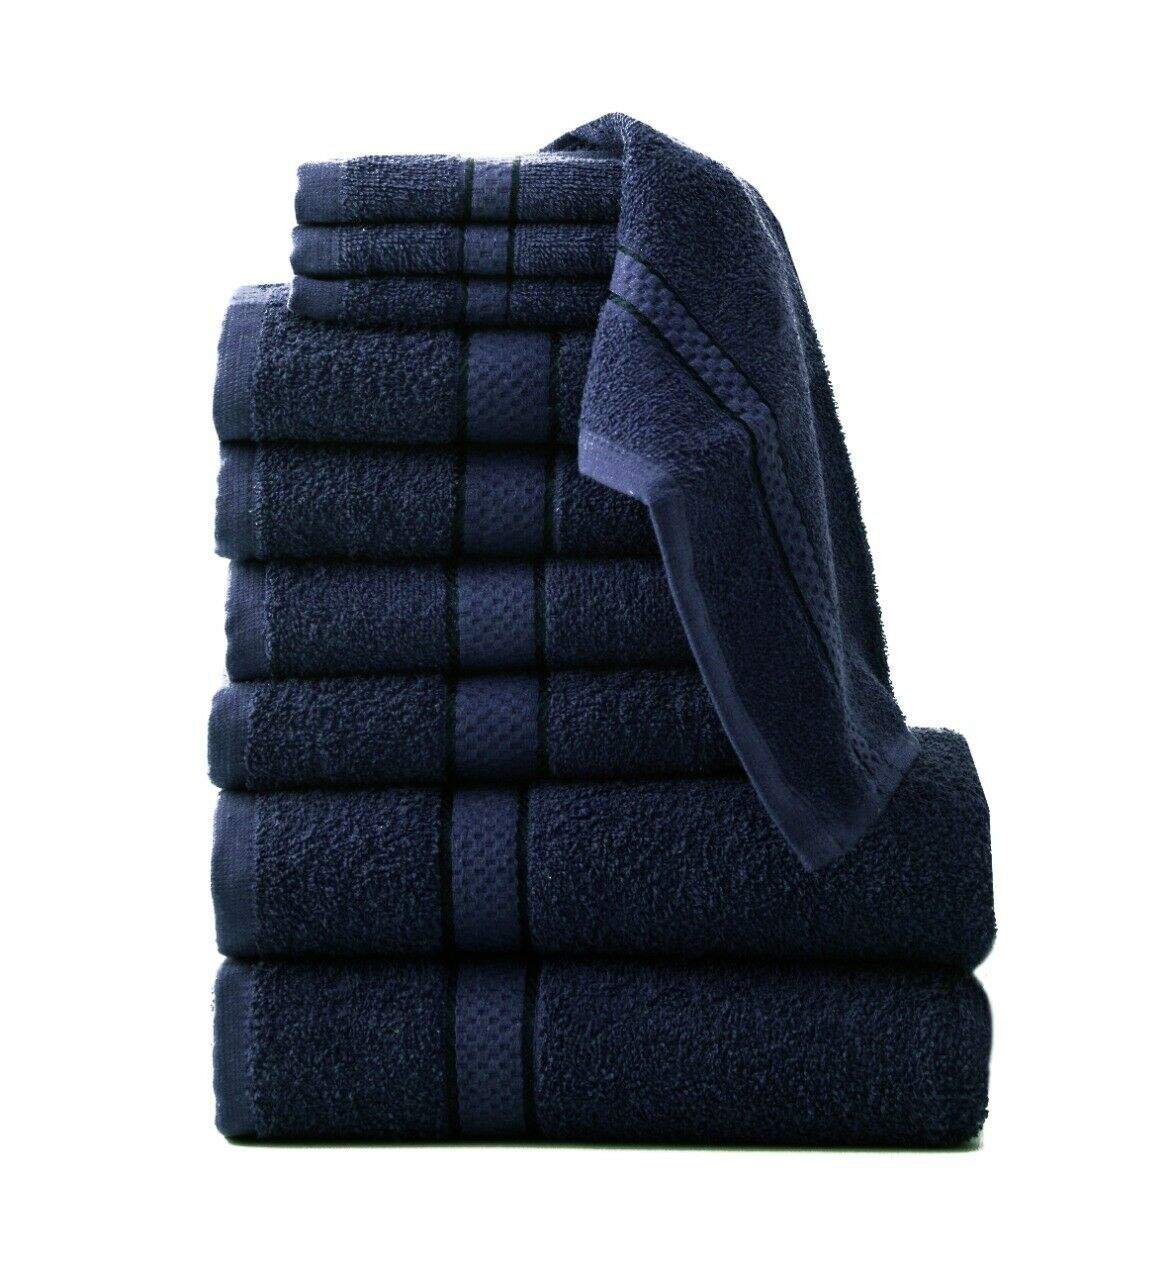 towel bale set